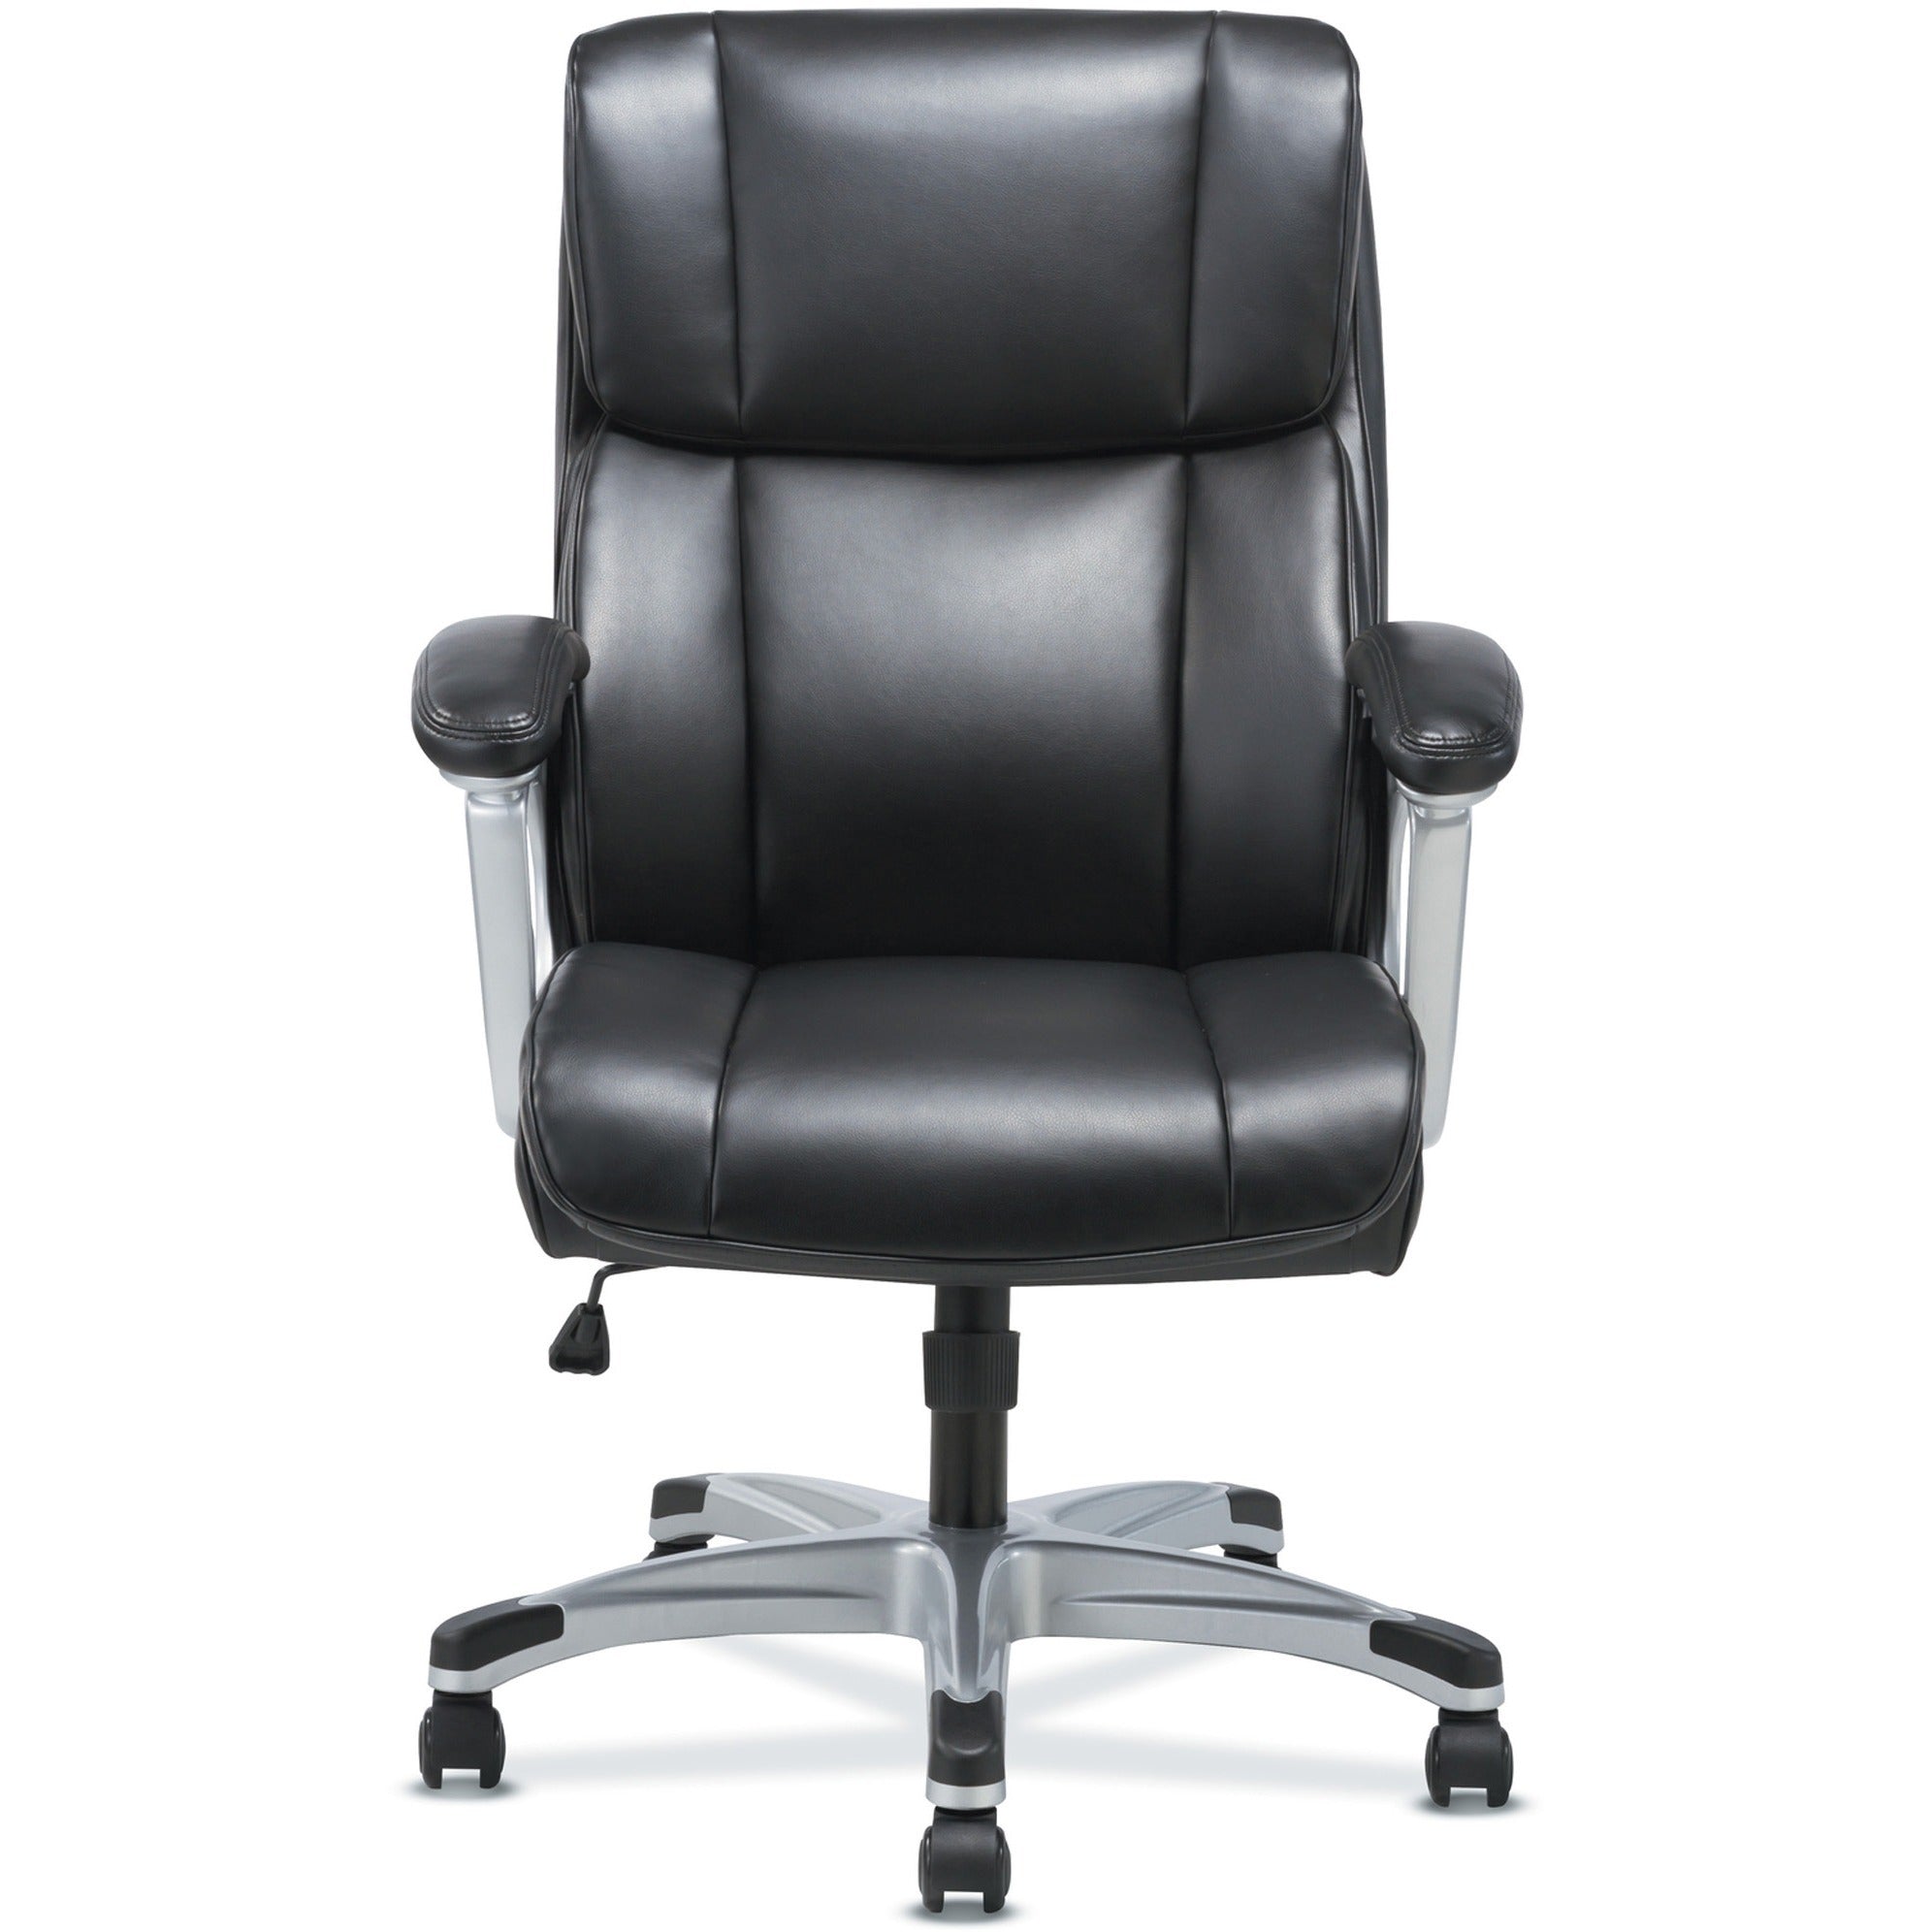 Sadie 3-Fifteen Executive Leather Chair - Black Plush, Bonded Leather Seat - Black Plush, Bonded Leather Back - High Back - 5-star Base - 1 Each - 2